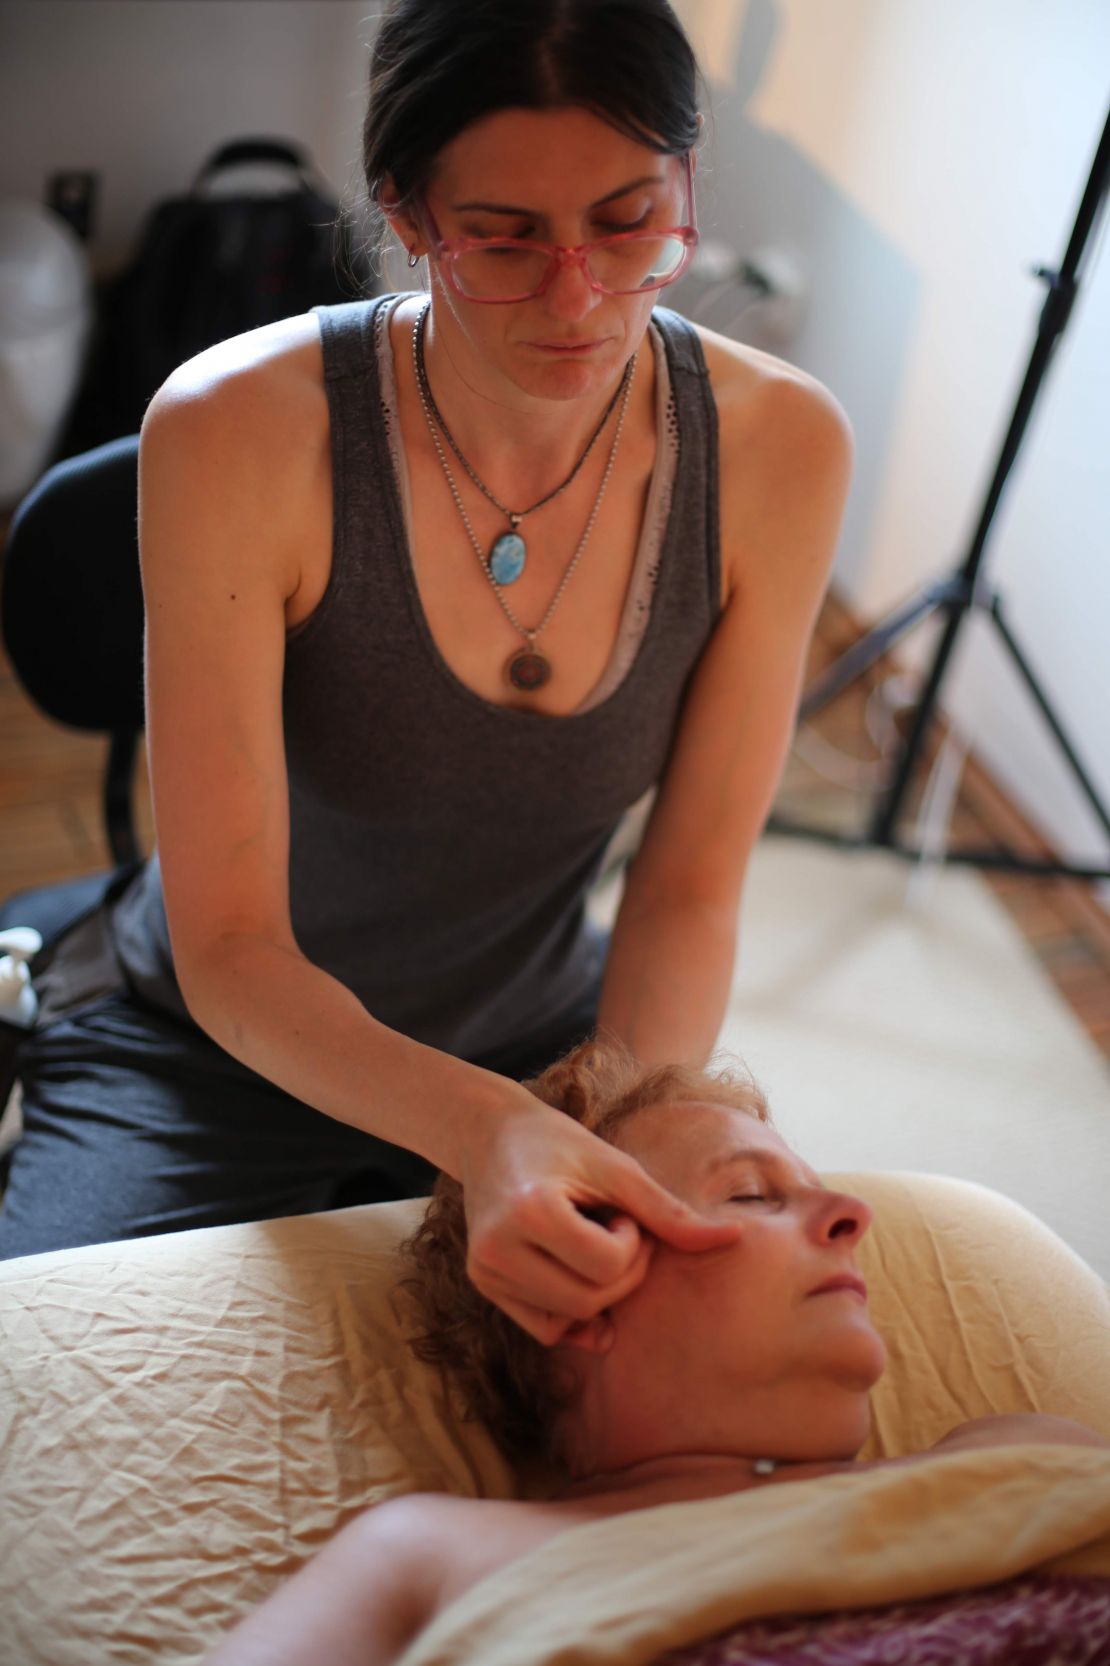 kristy narkunas massage therapy quantum healing blaine washington vancouver